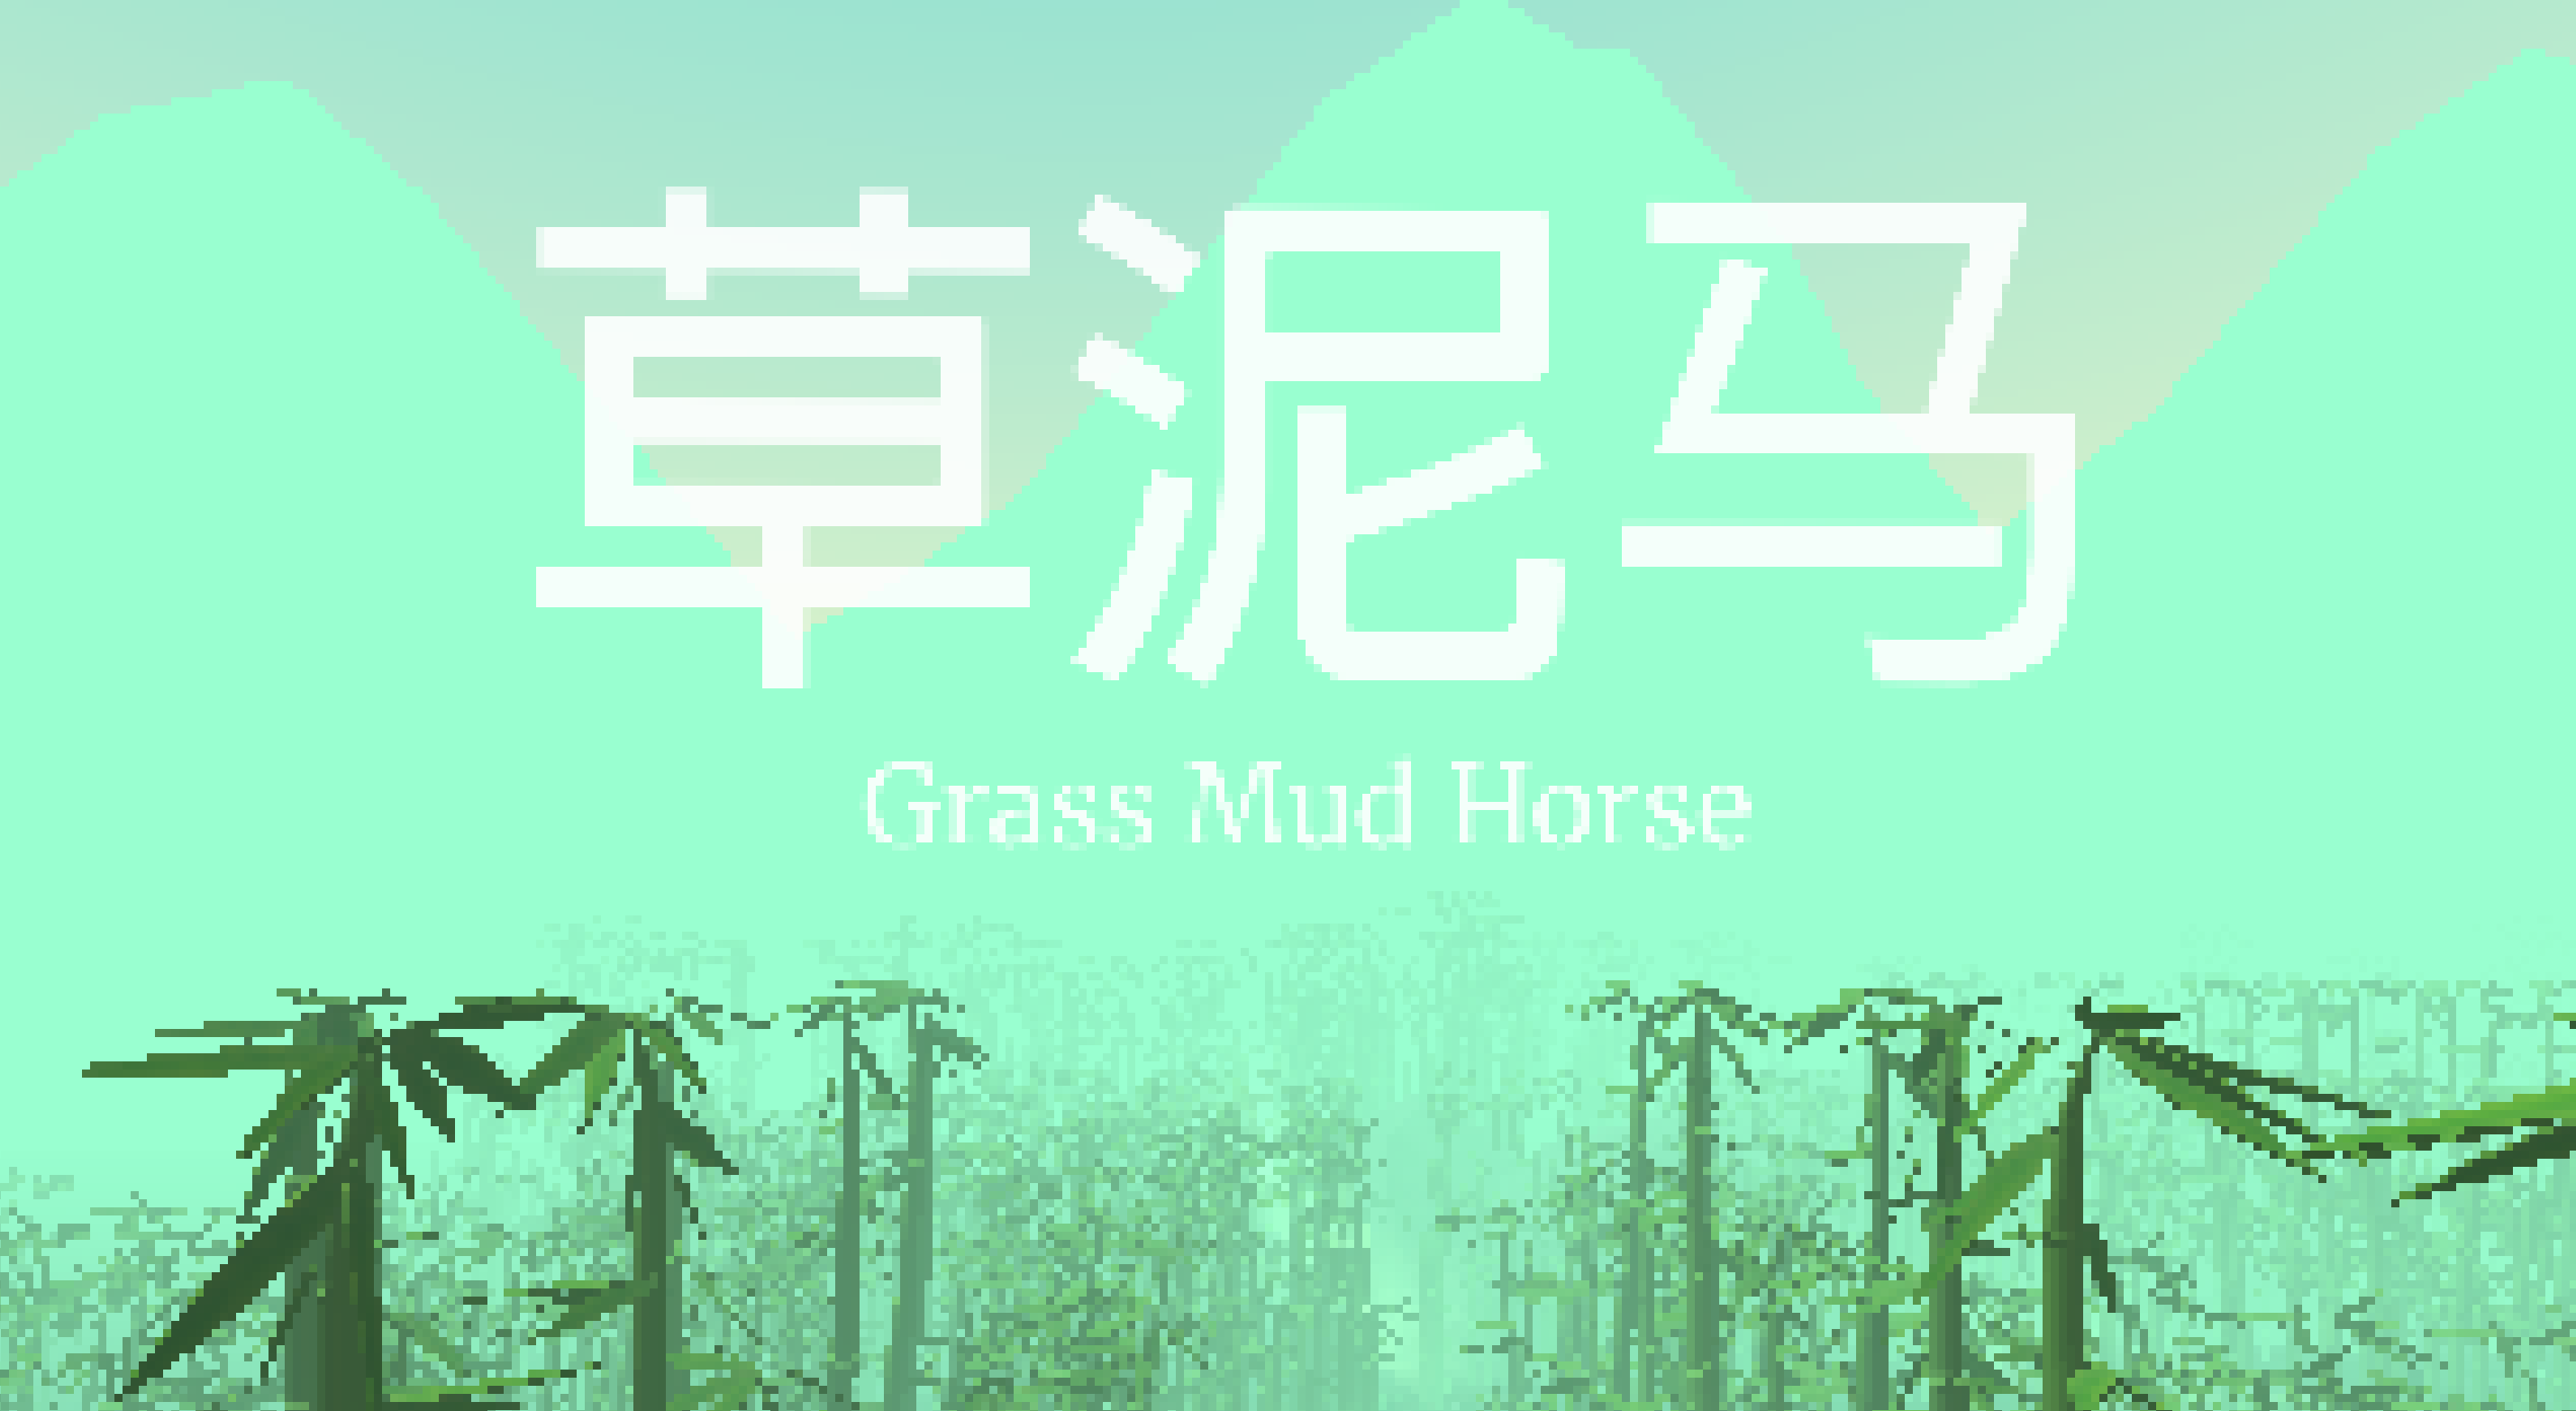 Grass Mud Horse